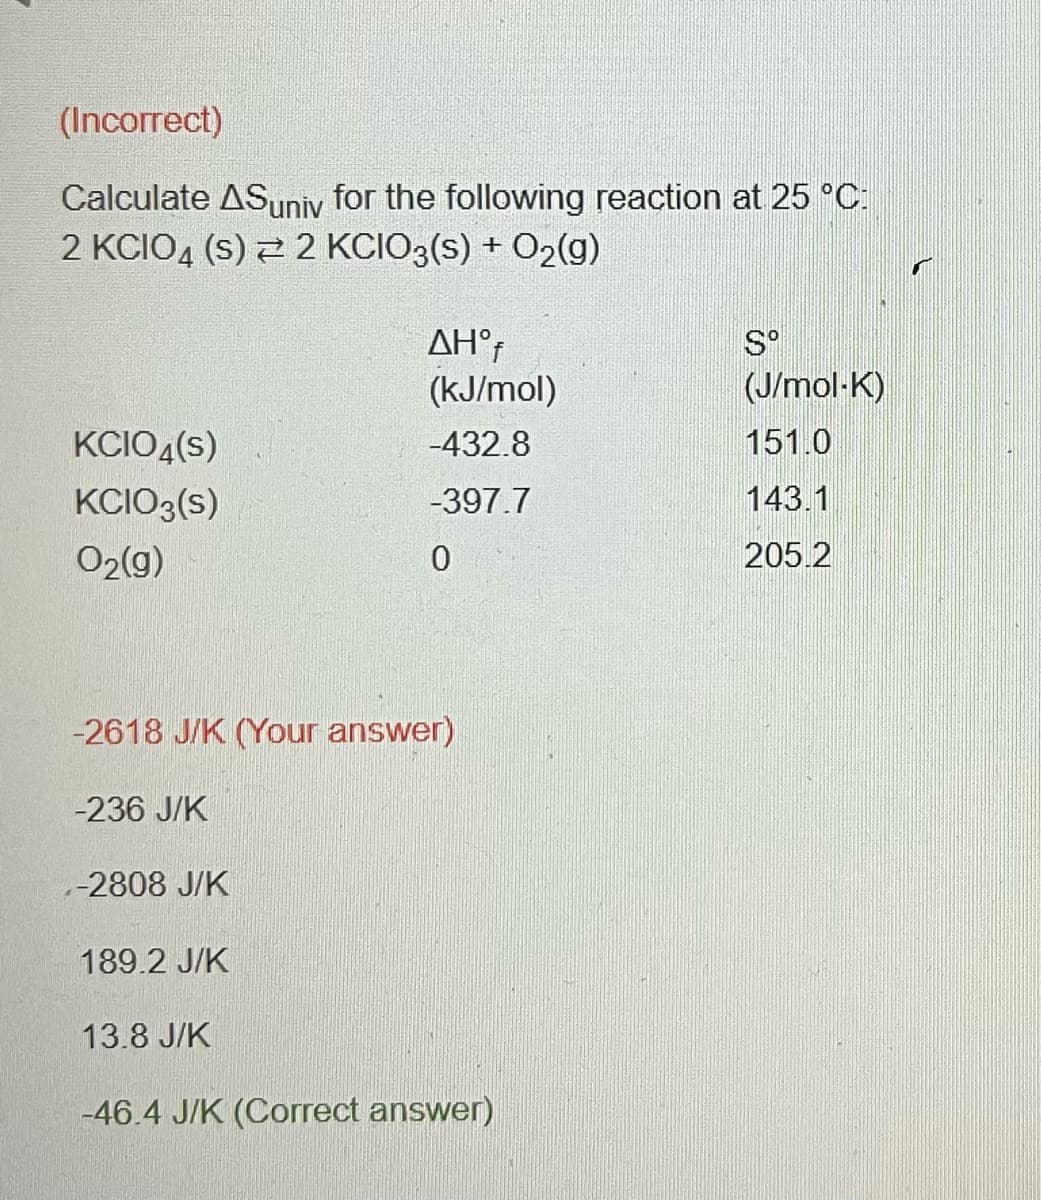 (Incorrect)
Calculate ASuniv for the following reaction at 25 °C:
2 KCIO4 (S) 2 KCIO3(s) + O2(g)
KCIO4(s)
KCIO3(s)
0₂(g)
-2618 J/K (Your answer)
-236 J/K
.-2808 J/K
189.2 J/K
AHºf
(kJ/mol)
-432.8
-397.7
0
13.8 J/K
-46.4 J/K (Correct answer)
Sº
(J/mol-K)
151.0
143.1
205.2